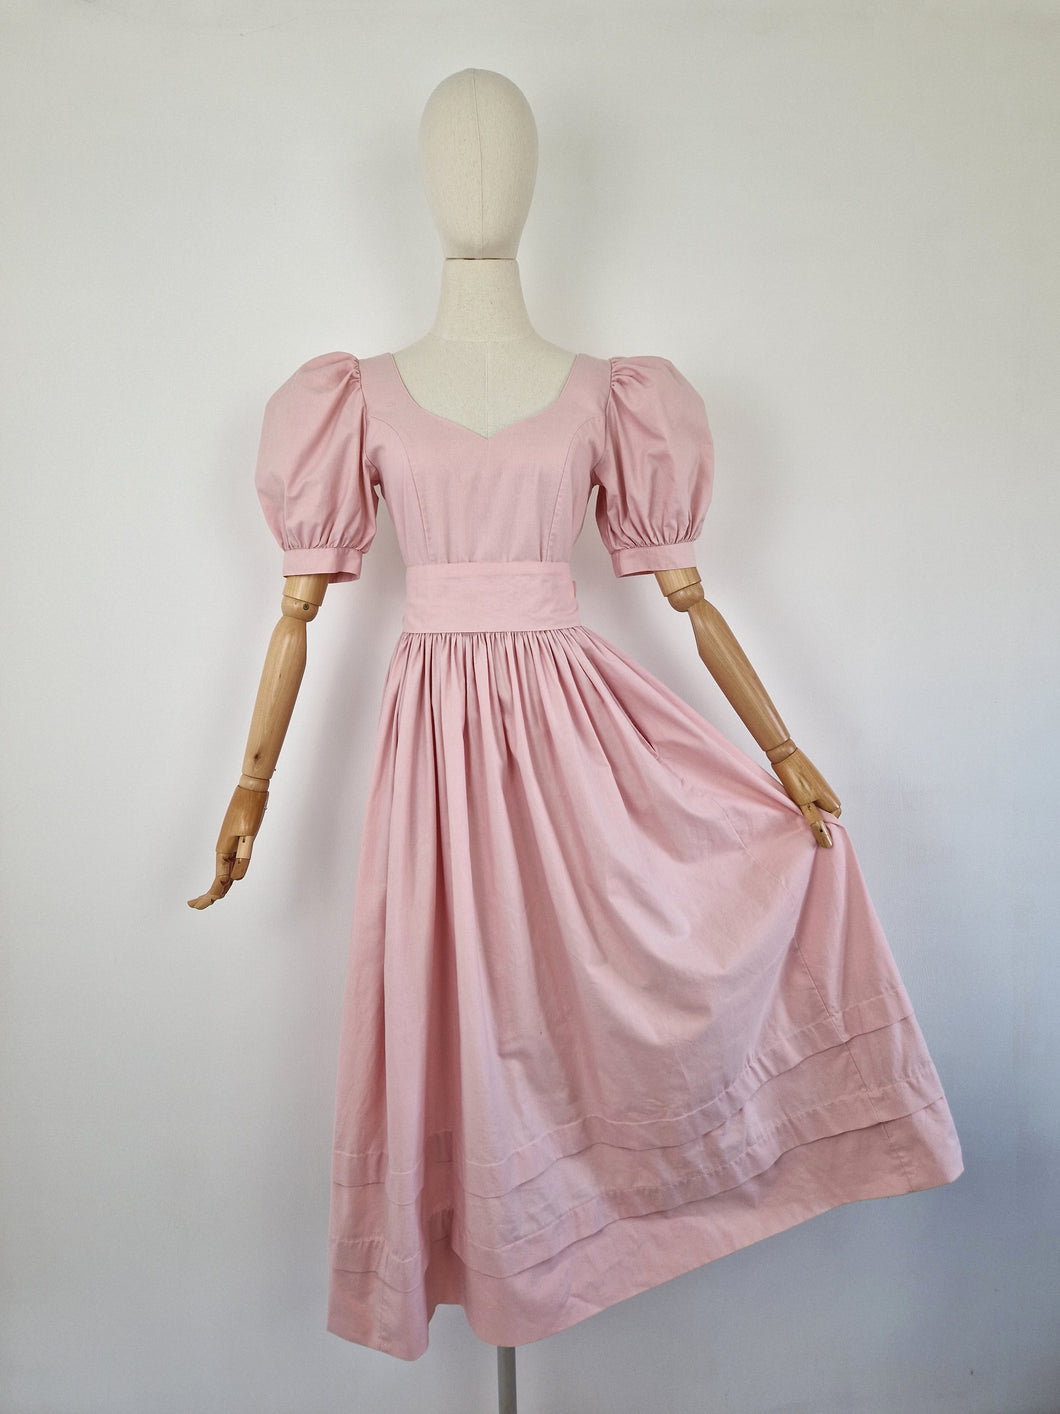 Vintage 80s Laura Ashley pink ballgown dress